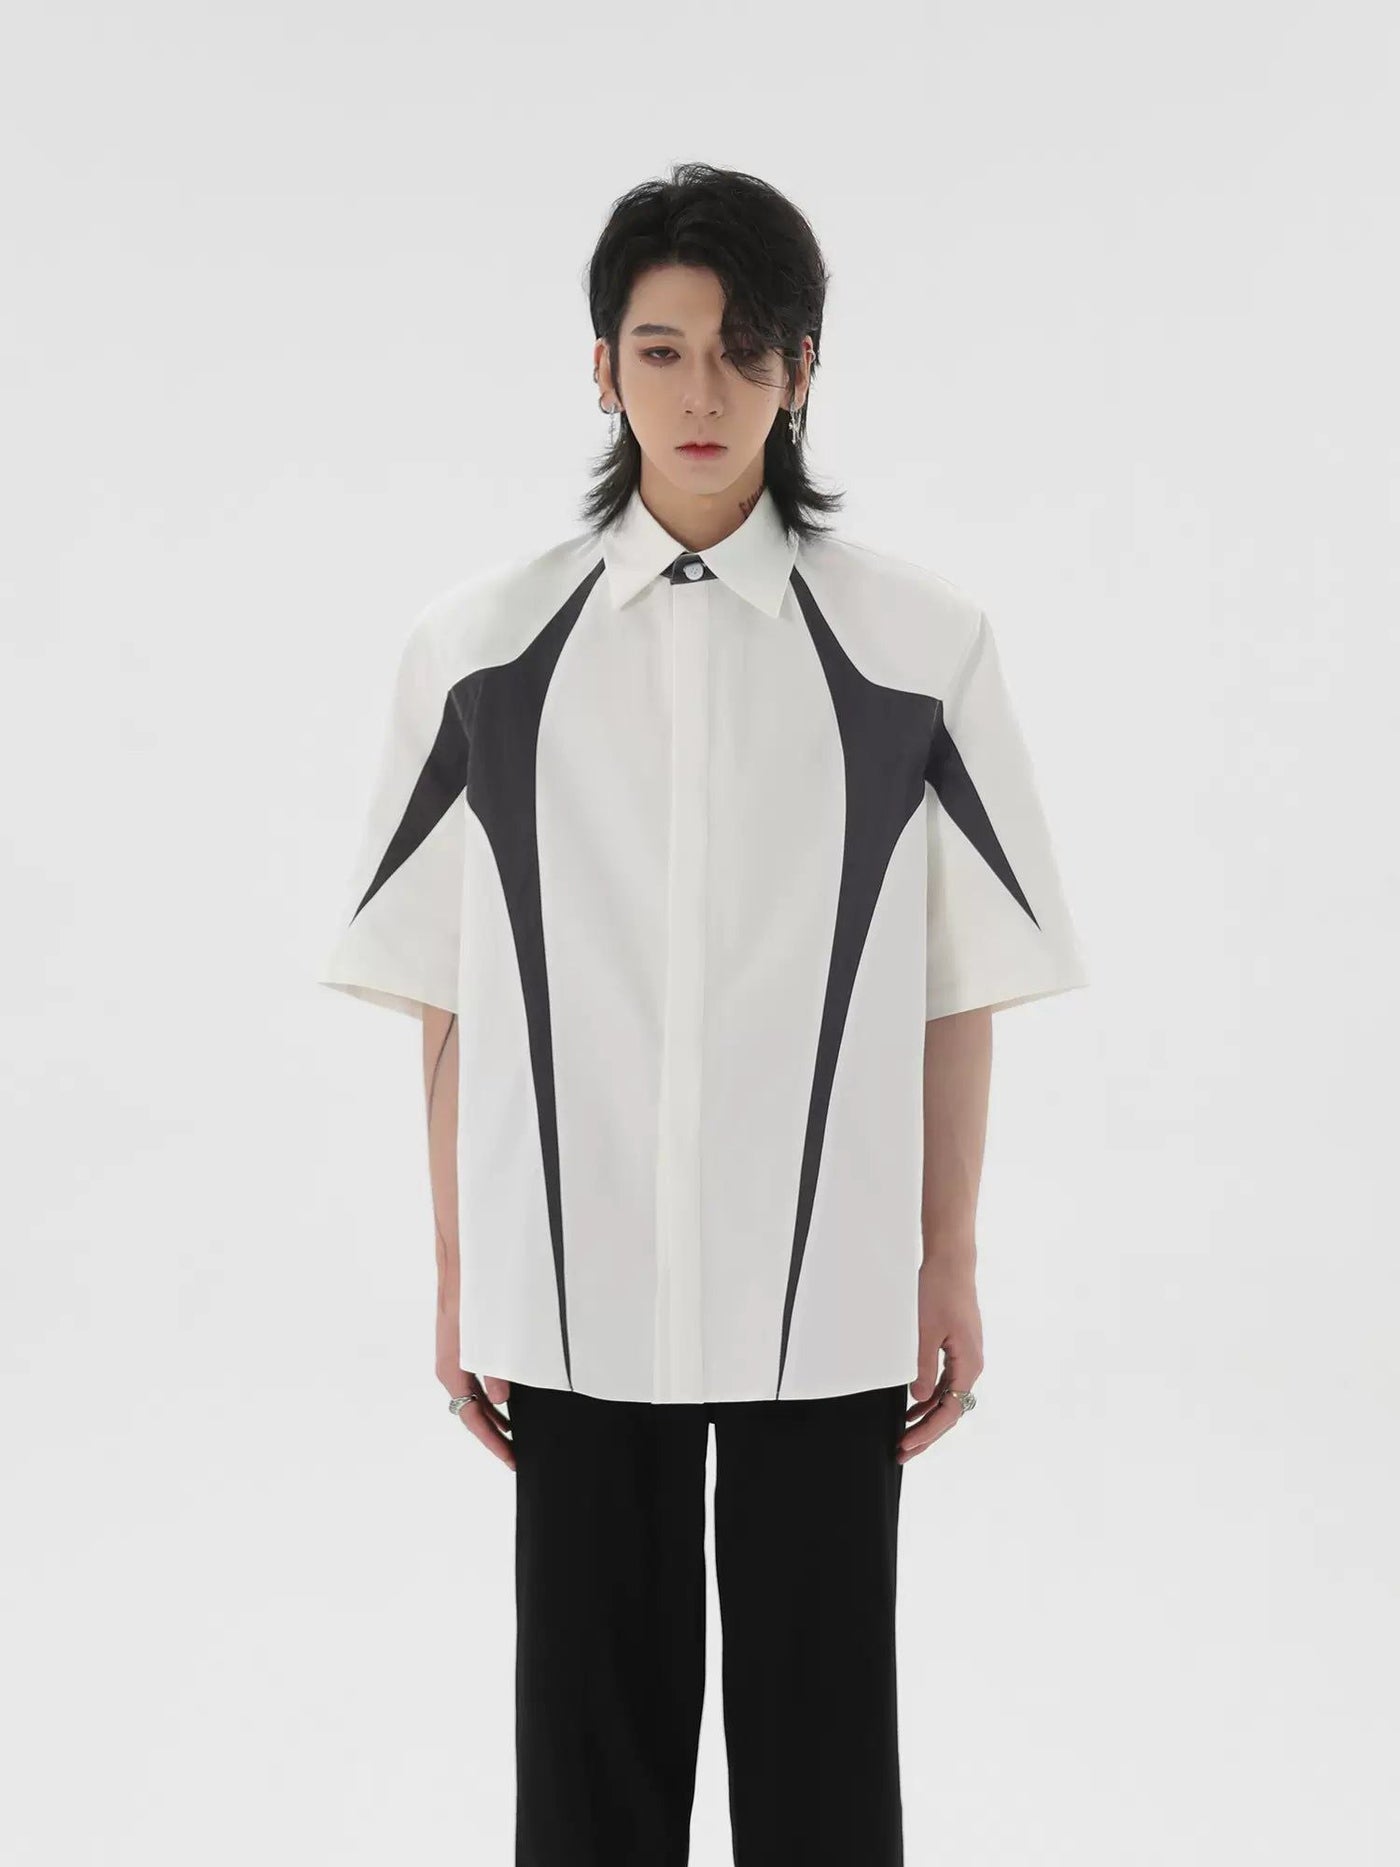 Contrast Blades Spliced T-Shirt Korean Street Fashion T-Shirt By HARH Shop Online at OH Vault